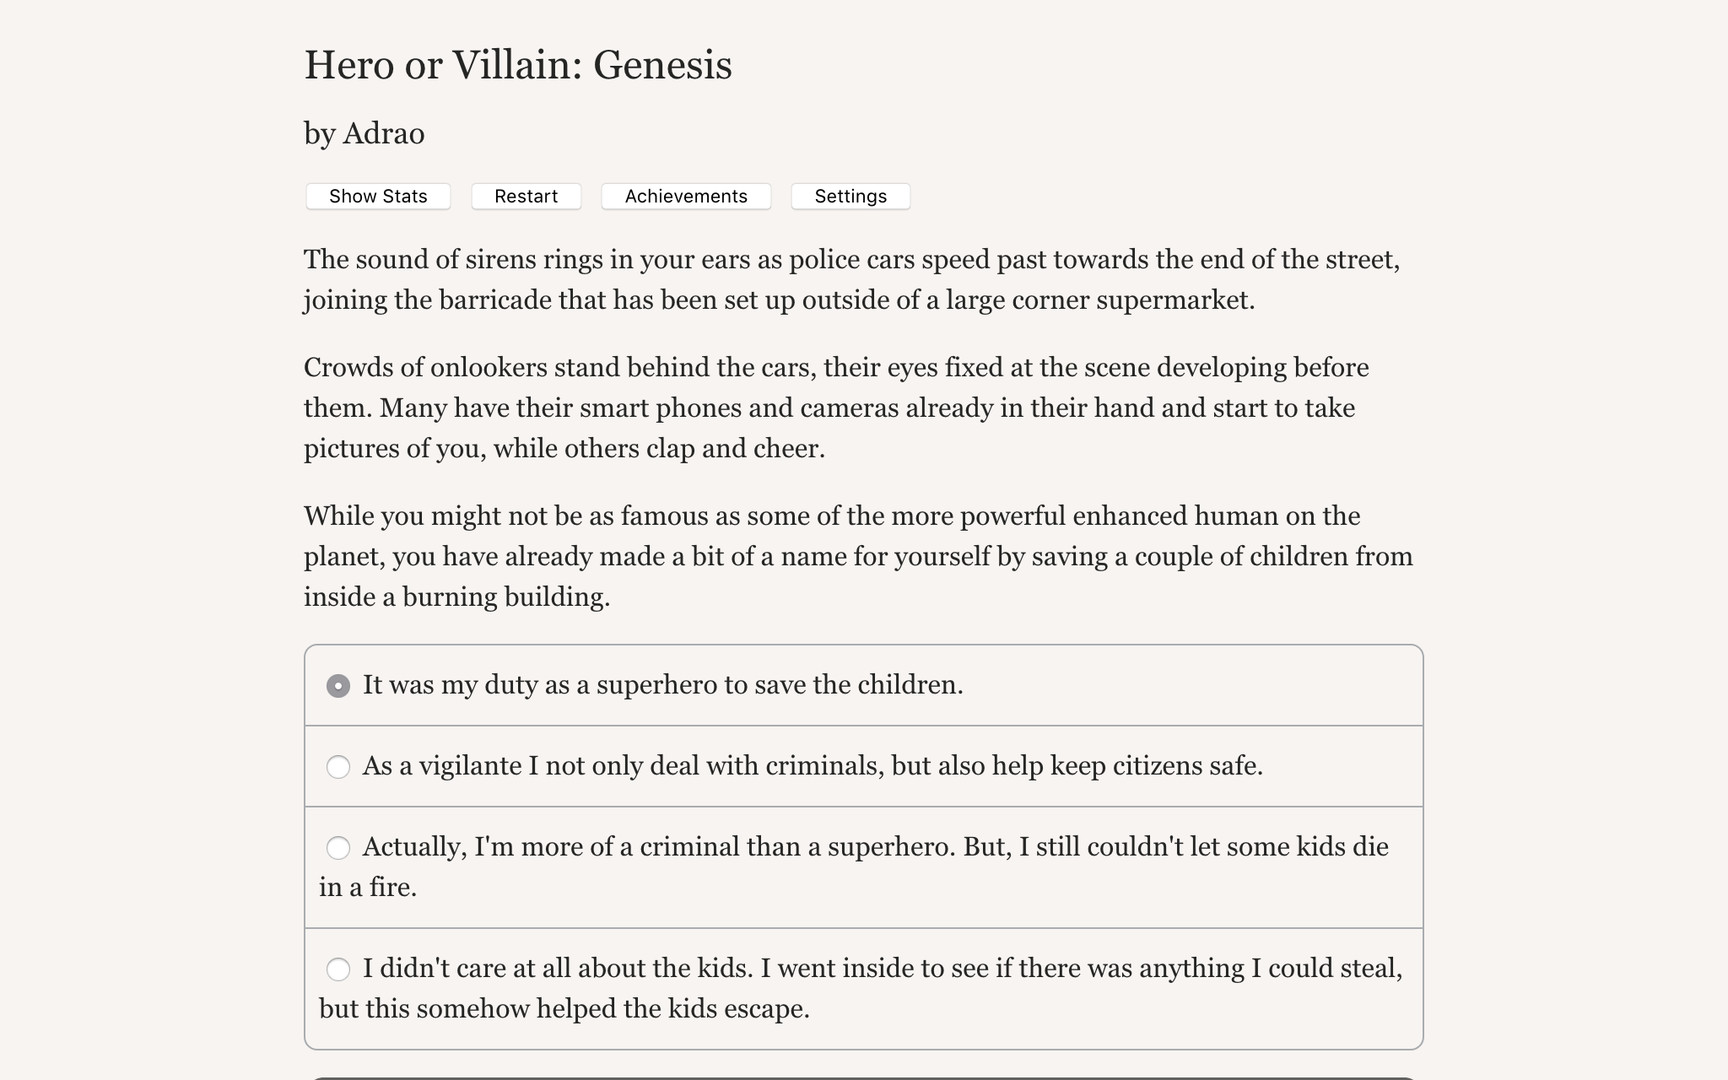 Hero or Villain: Genesis Free Download